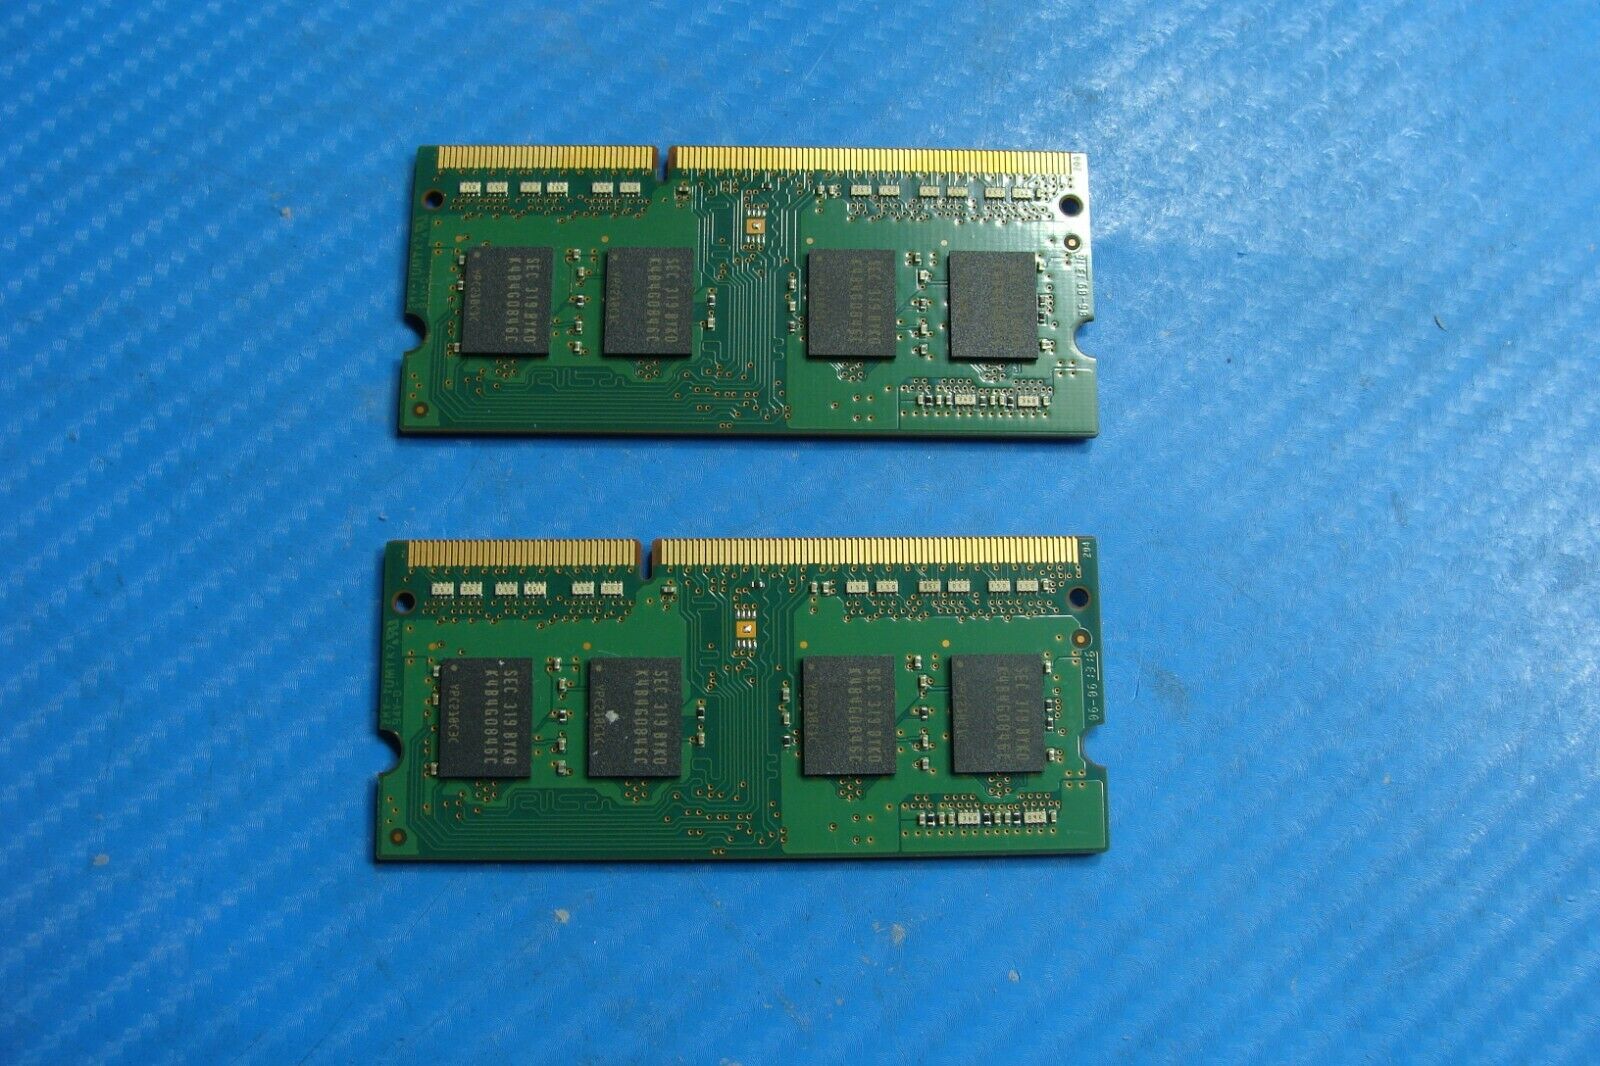 HP 23-f217c Samsung 4Gb x2 1Rx8 Memory Ram S0-Dimm pc3l-12800s m471b5173cb0-yk0 - Laptop Parts - Buy Authentic Computer Parts - Top Seller Ebay